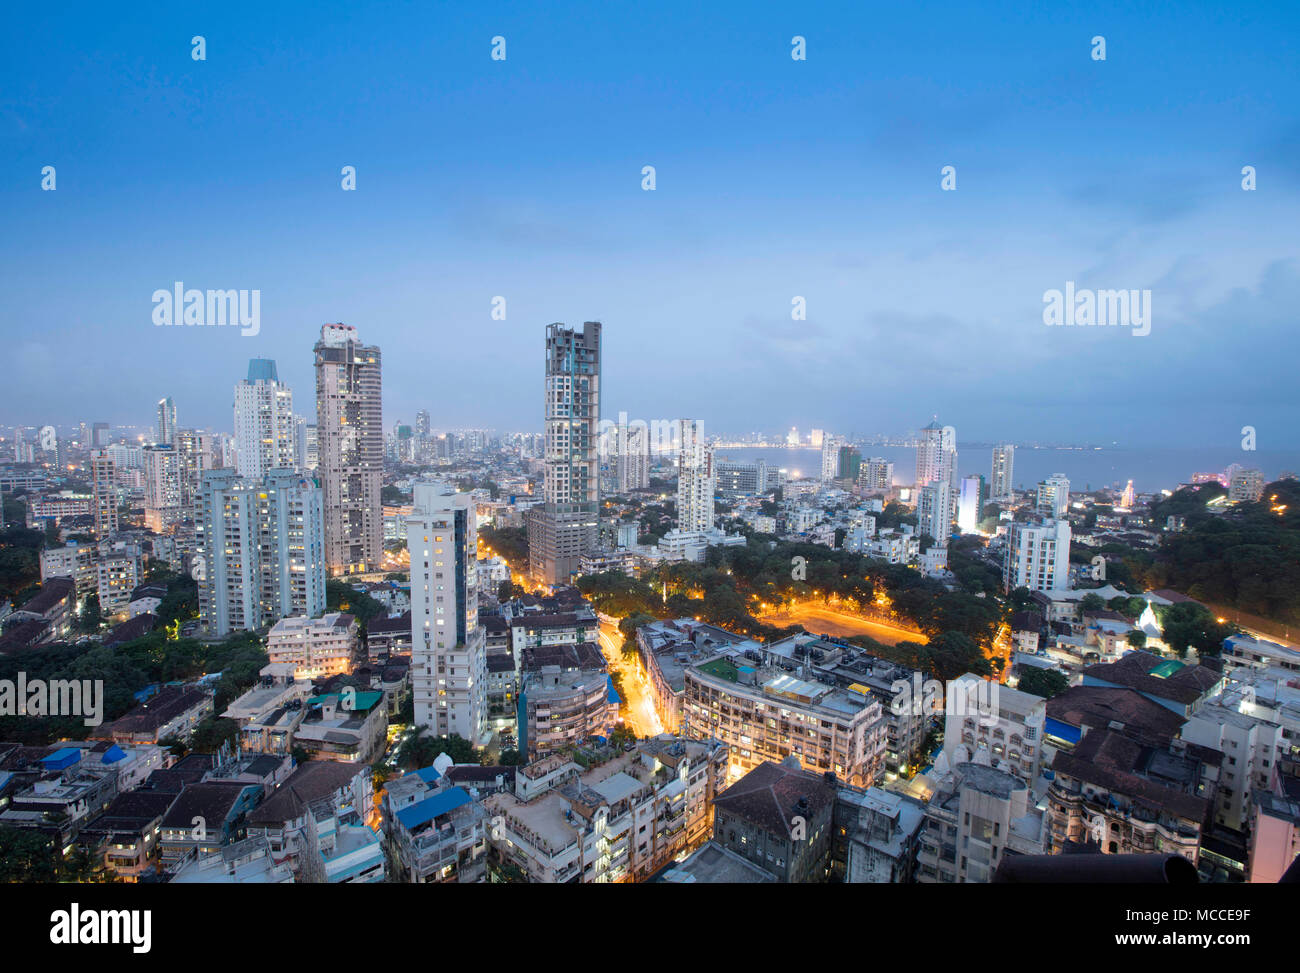 The urban skyline of central Mumbai showing apartment and business buildings, Maharashtra, India Stock Photo